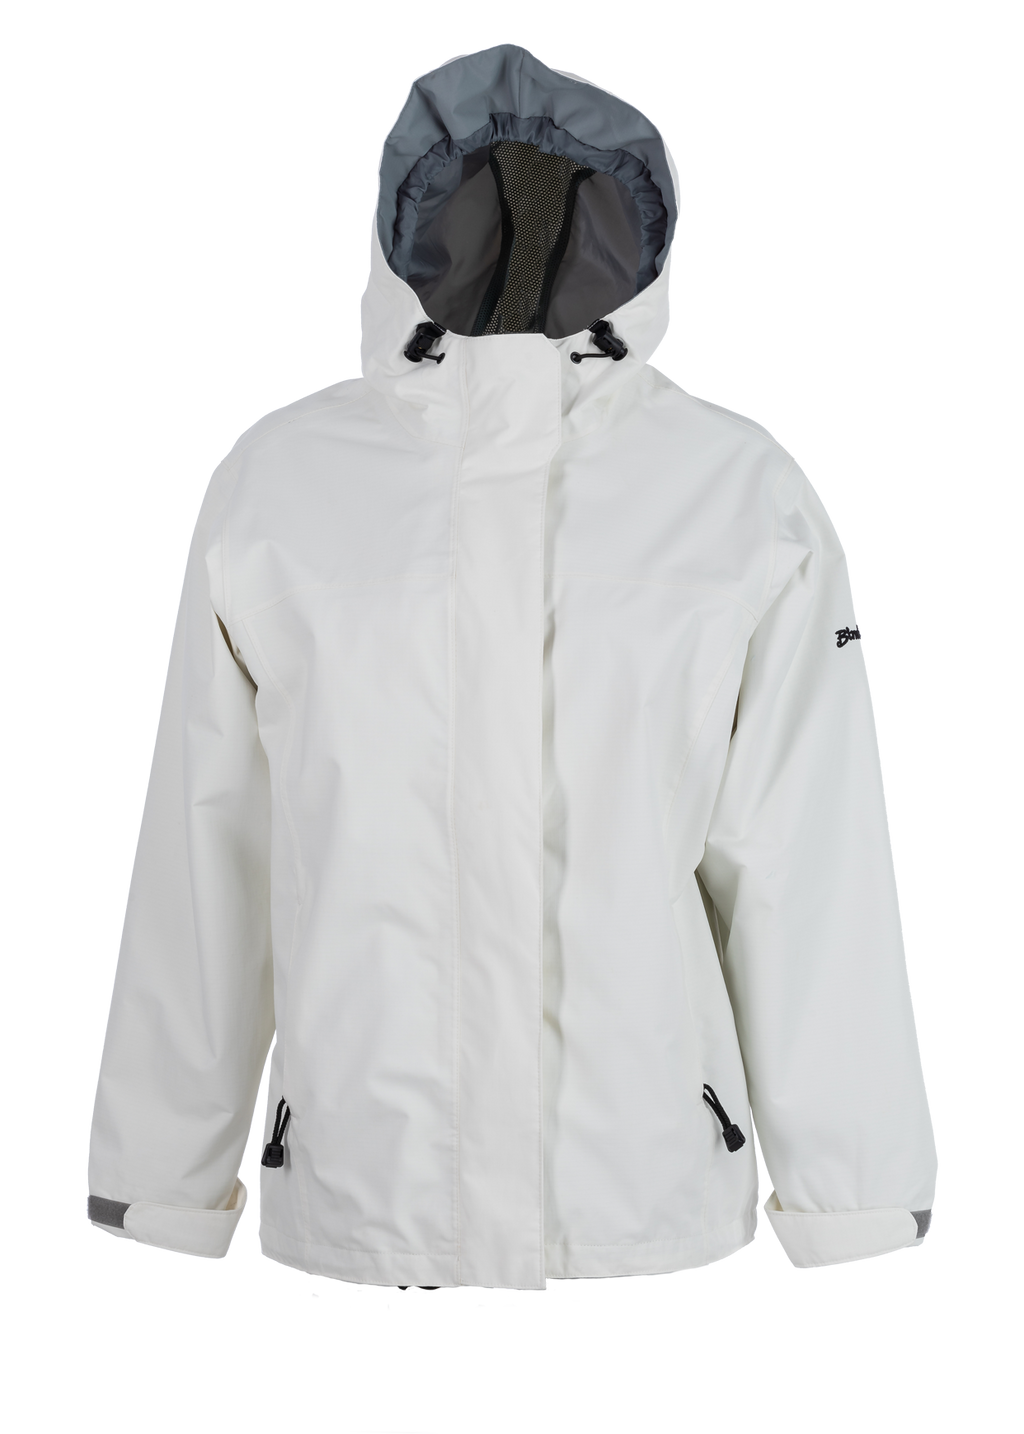 Bimini Bay Outfitters Boca Grande Women's Waterproof Breathable Jacket